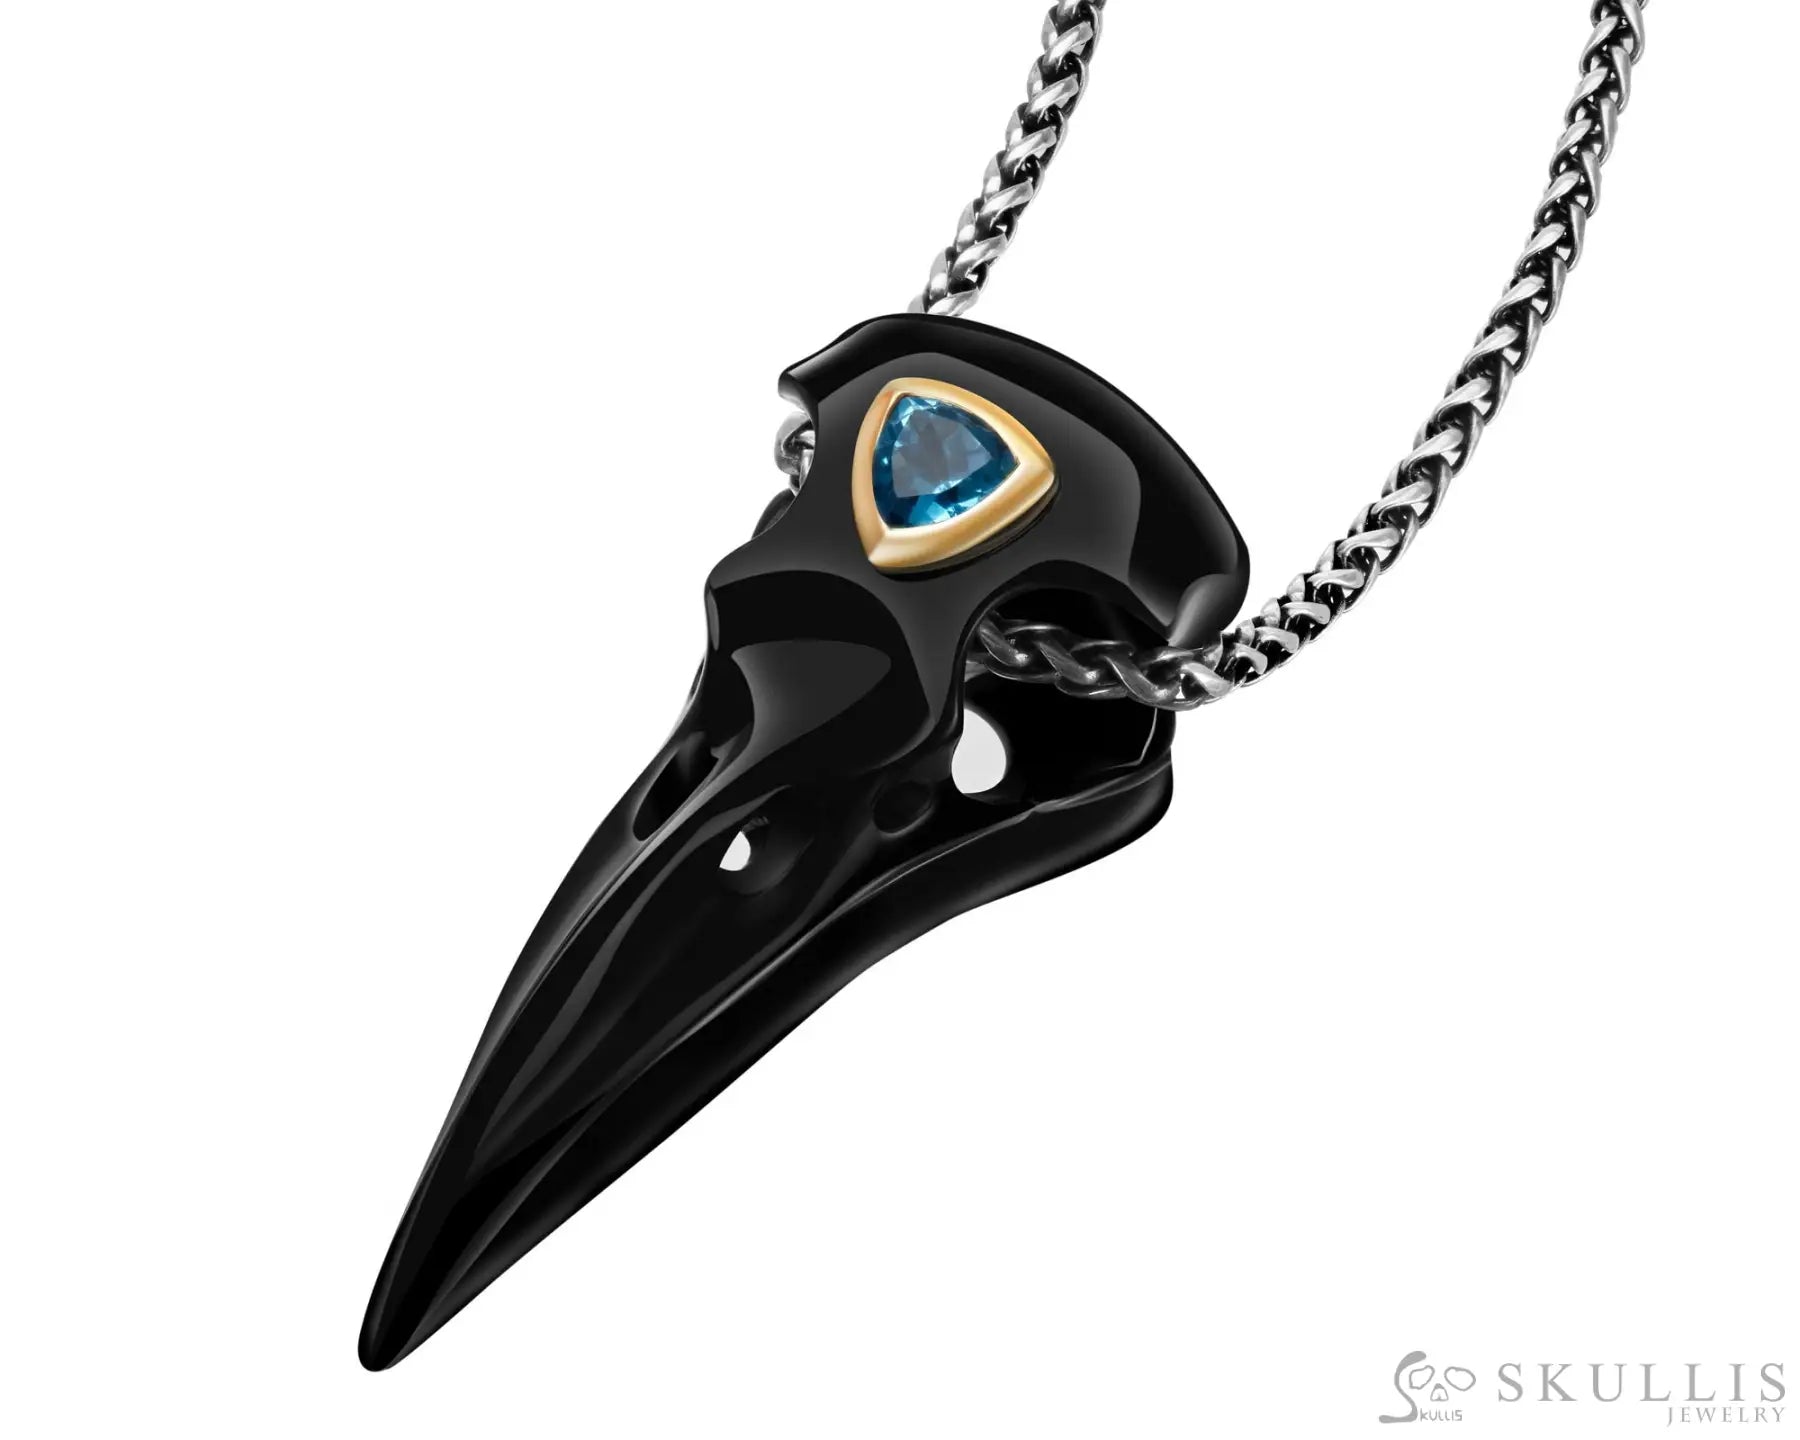 Gem Raven Pendant Necklace Of Black Obsidian Crystal Raven With Blue Sky Topaz Eye Pendant